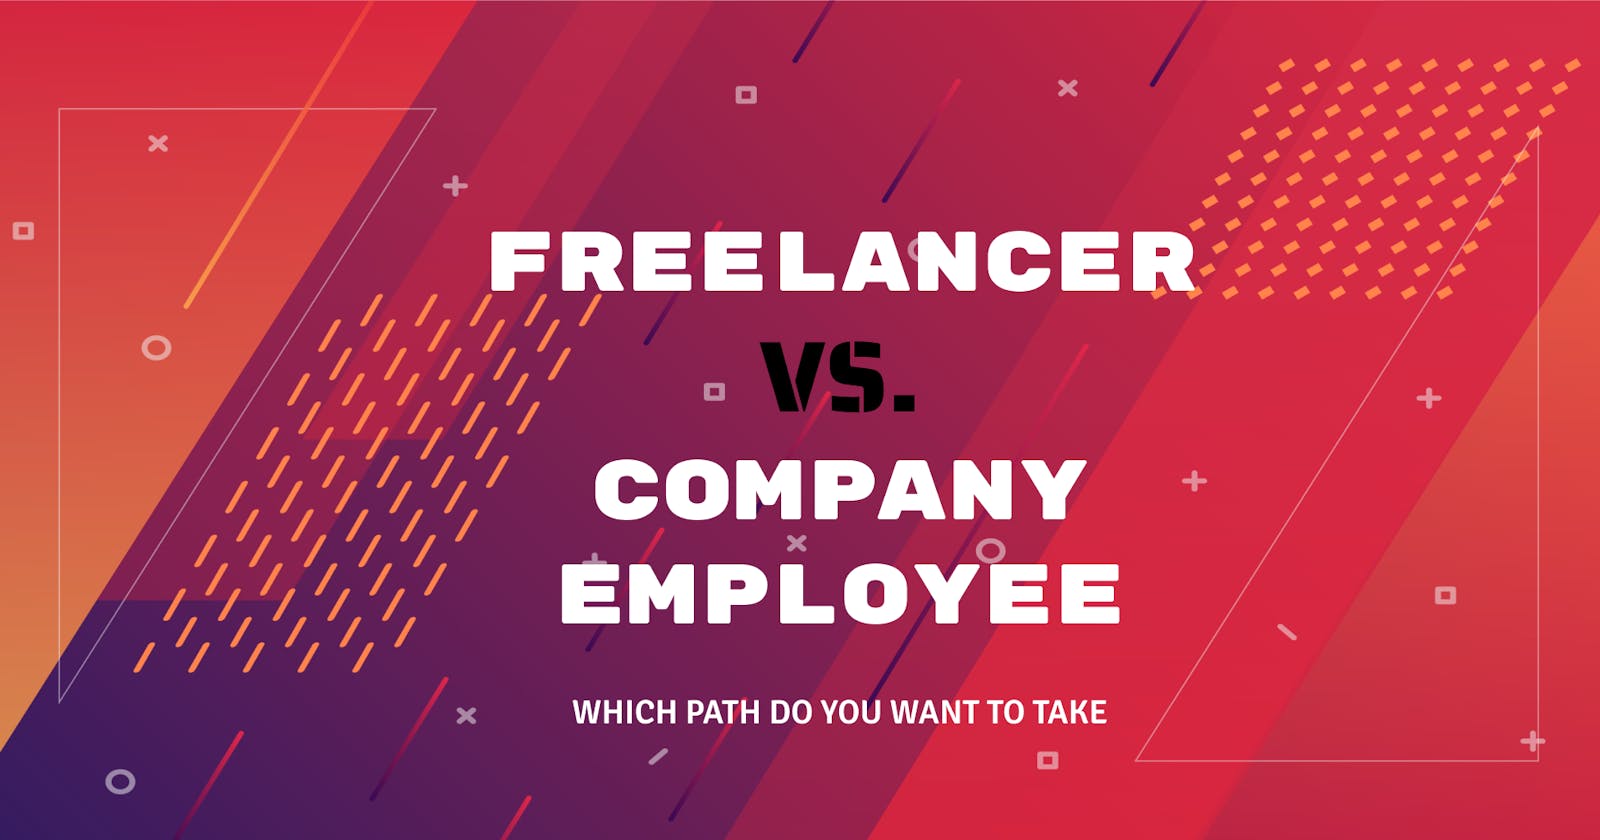 Freelancer vs. Company Employee